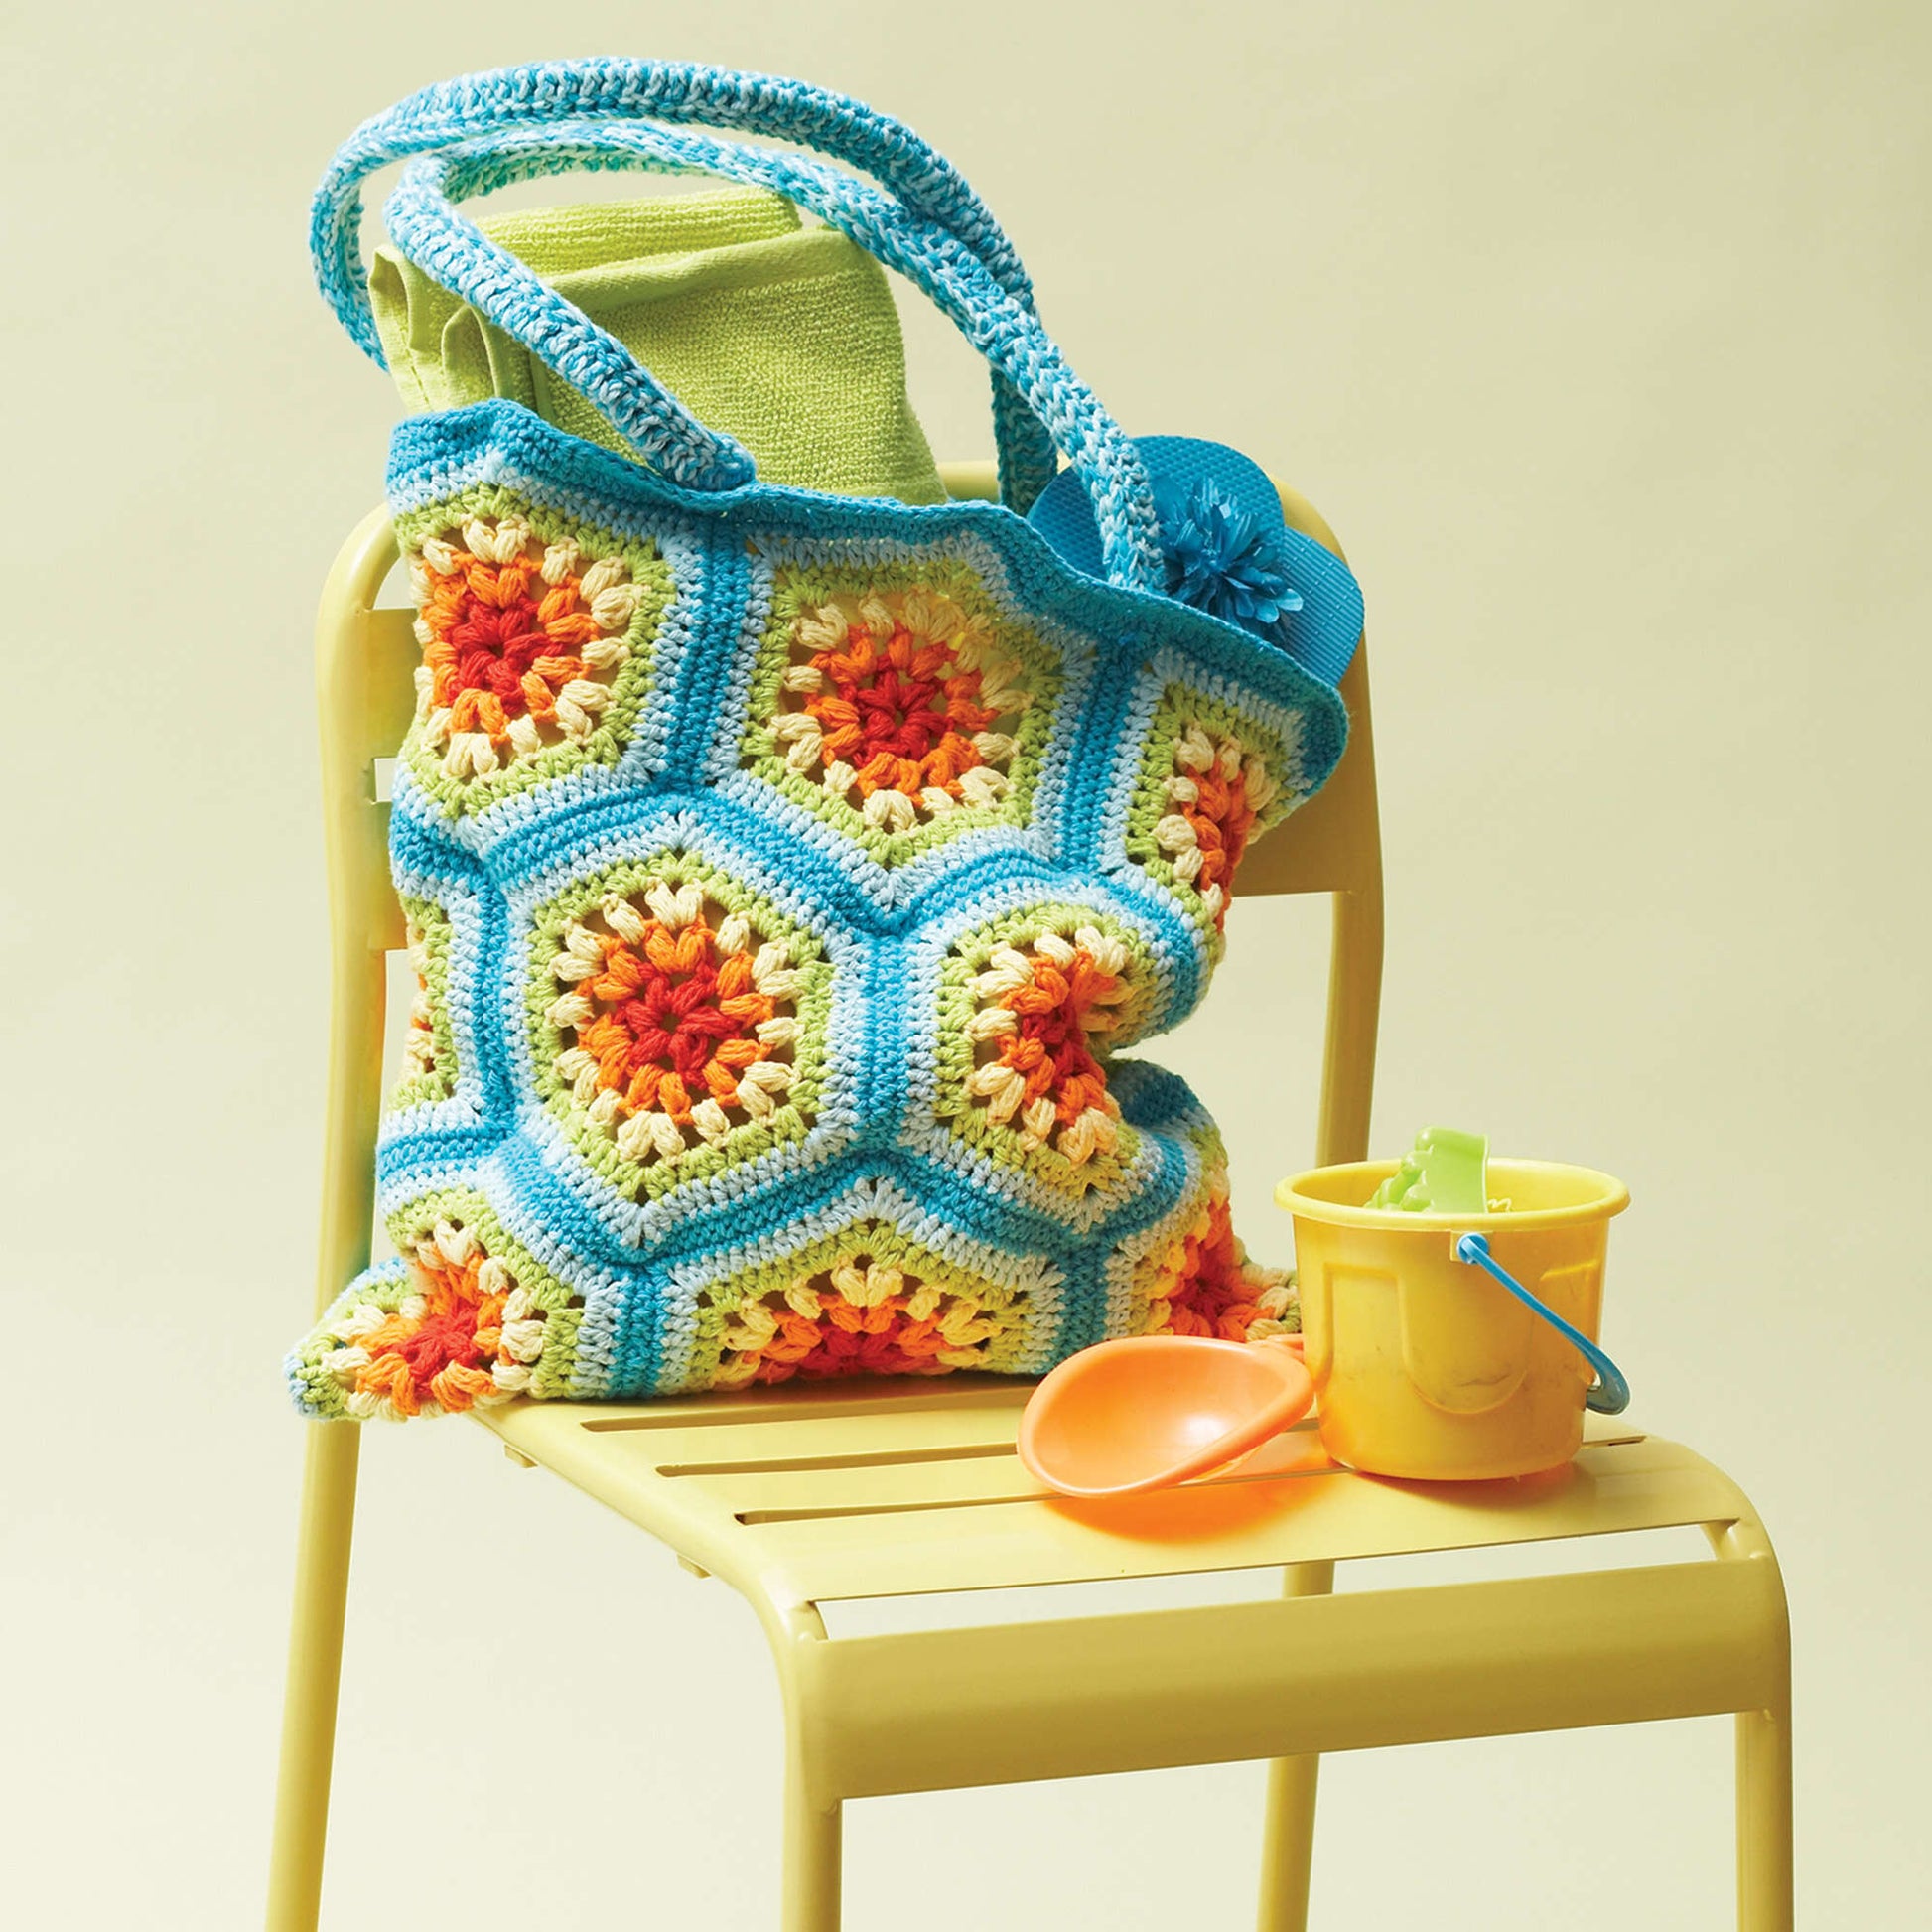 Free Lily Sugar'n Cream Rainbow Hexagon Beach Bag Crochet Pattern